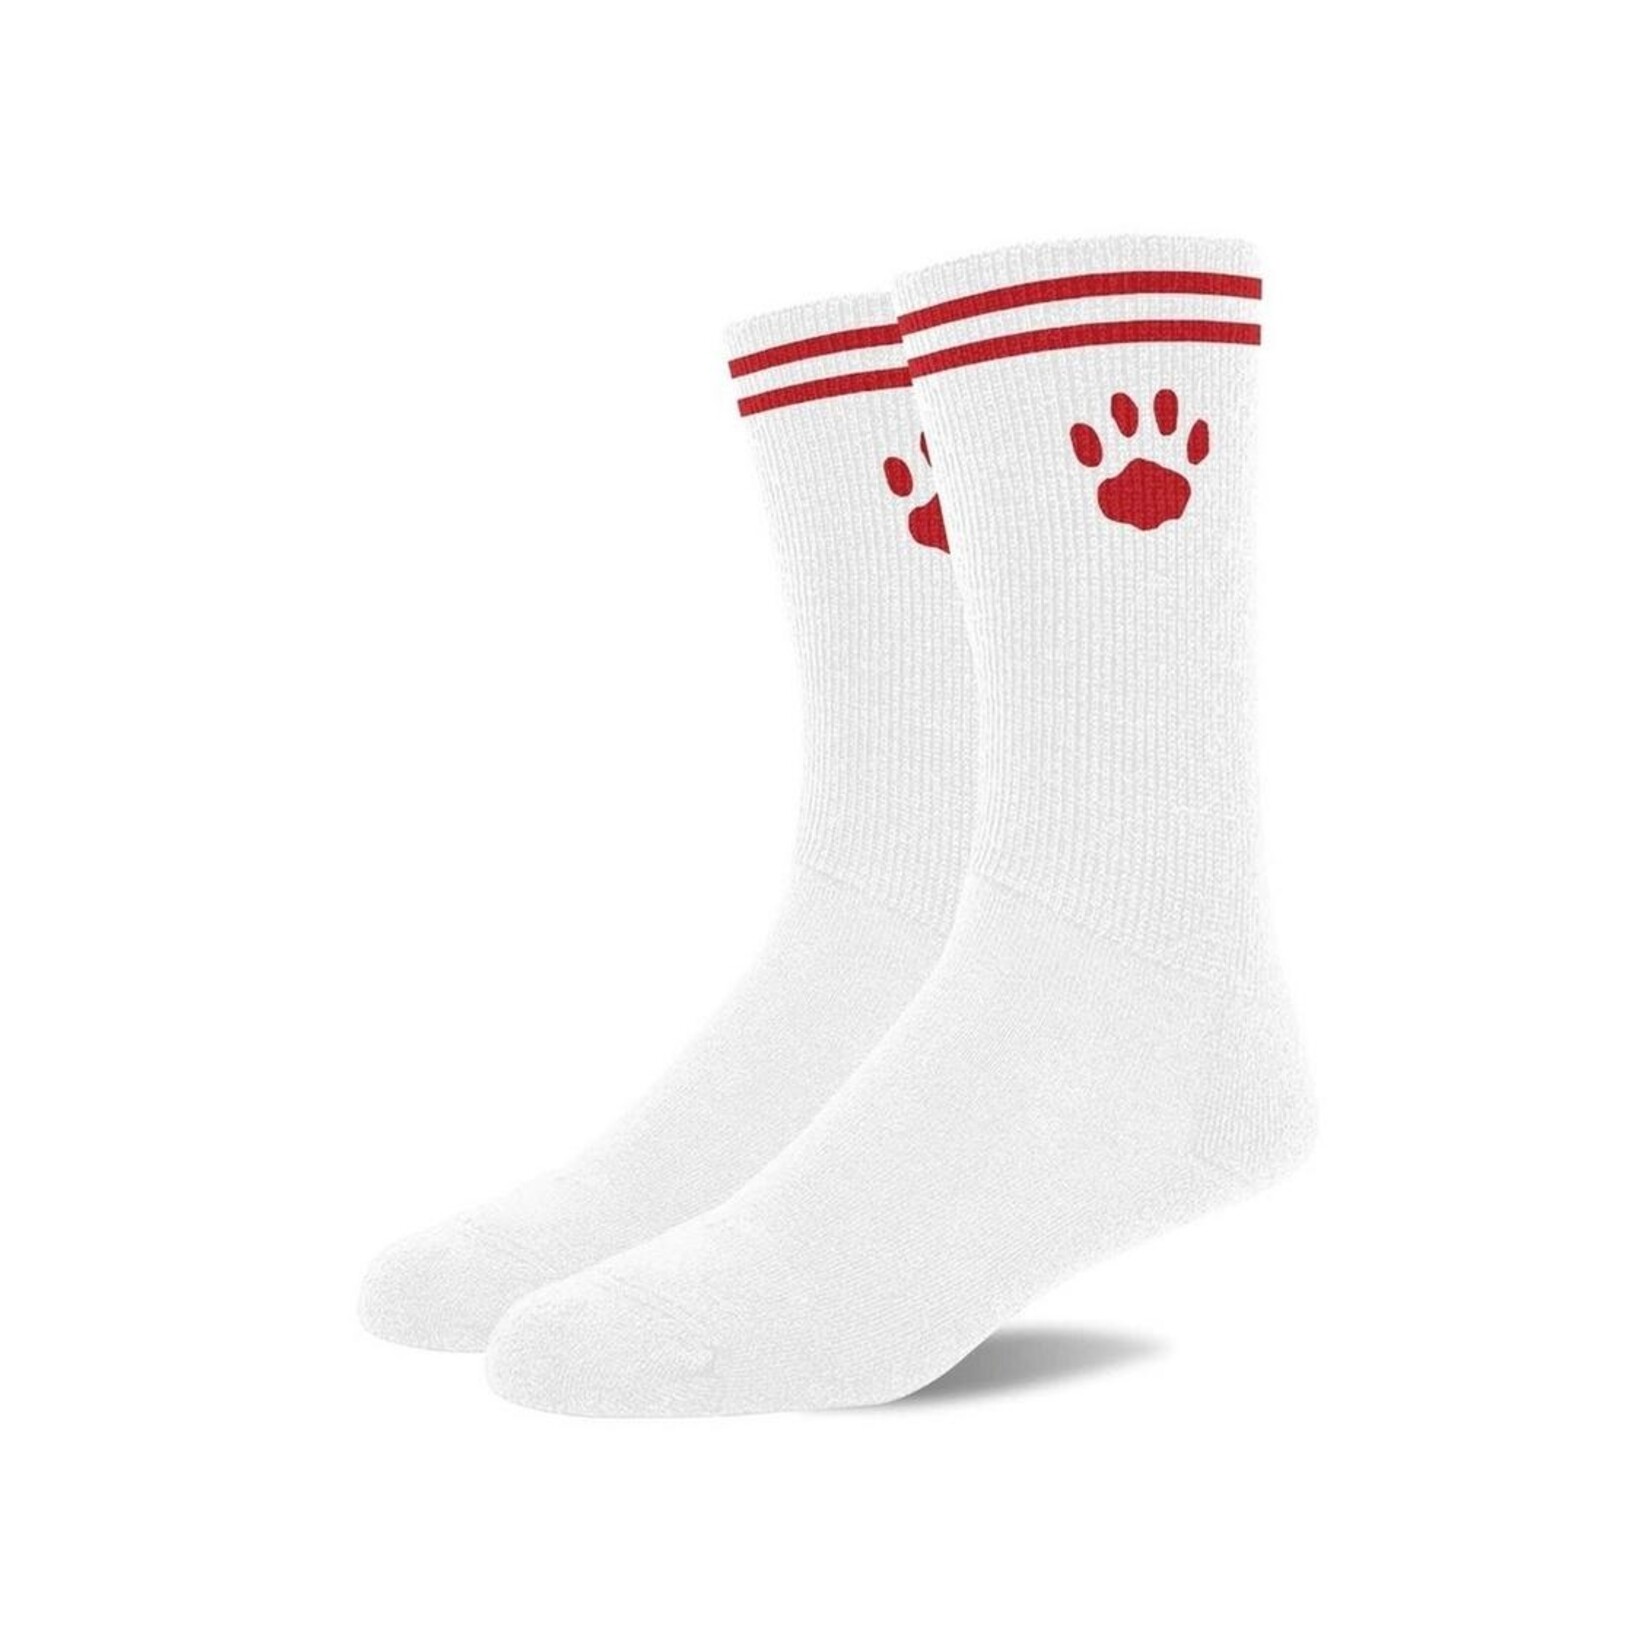 Prowler Prowler “Red” Socks